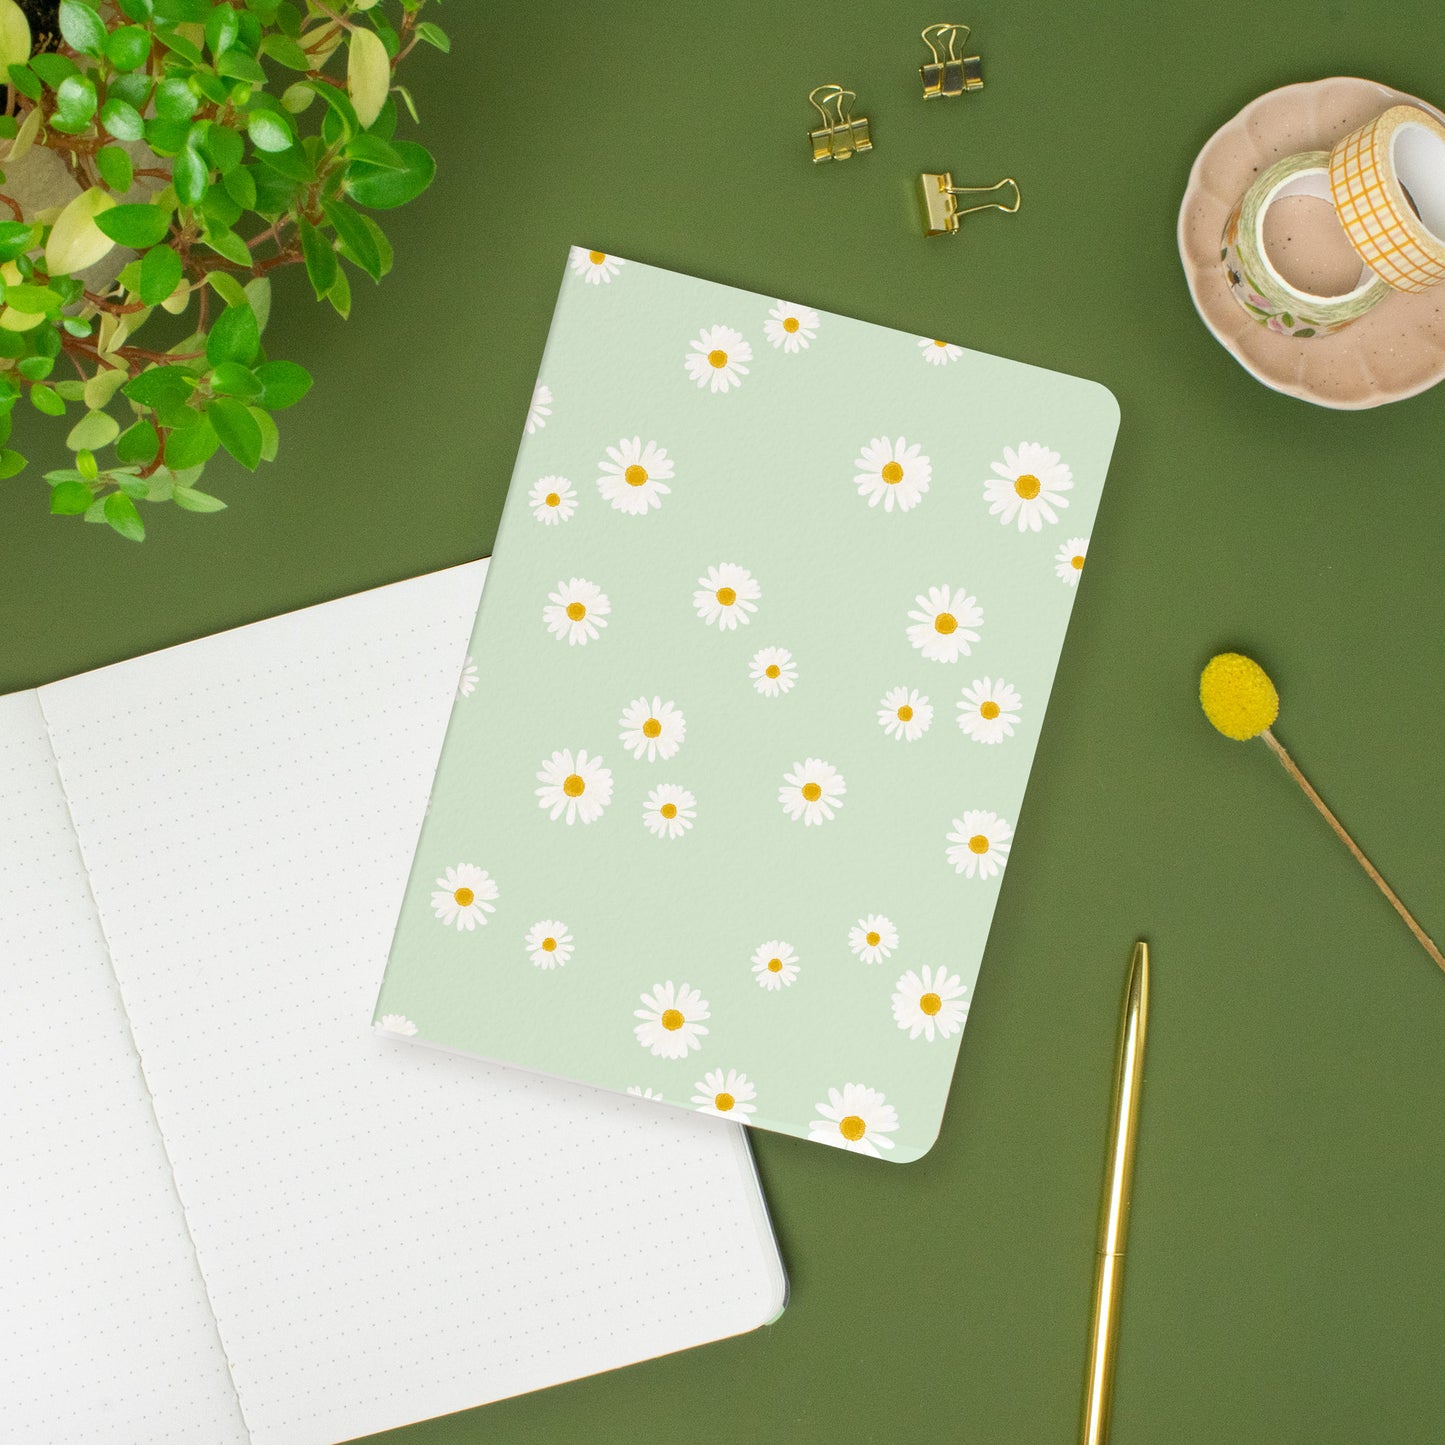 A5 Notebook Field of Daisies Mint Green